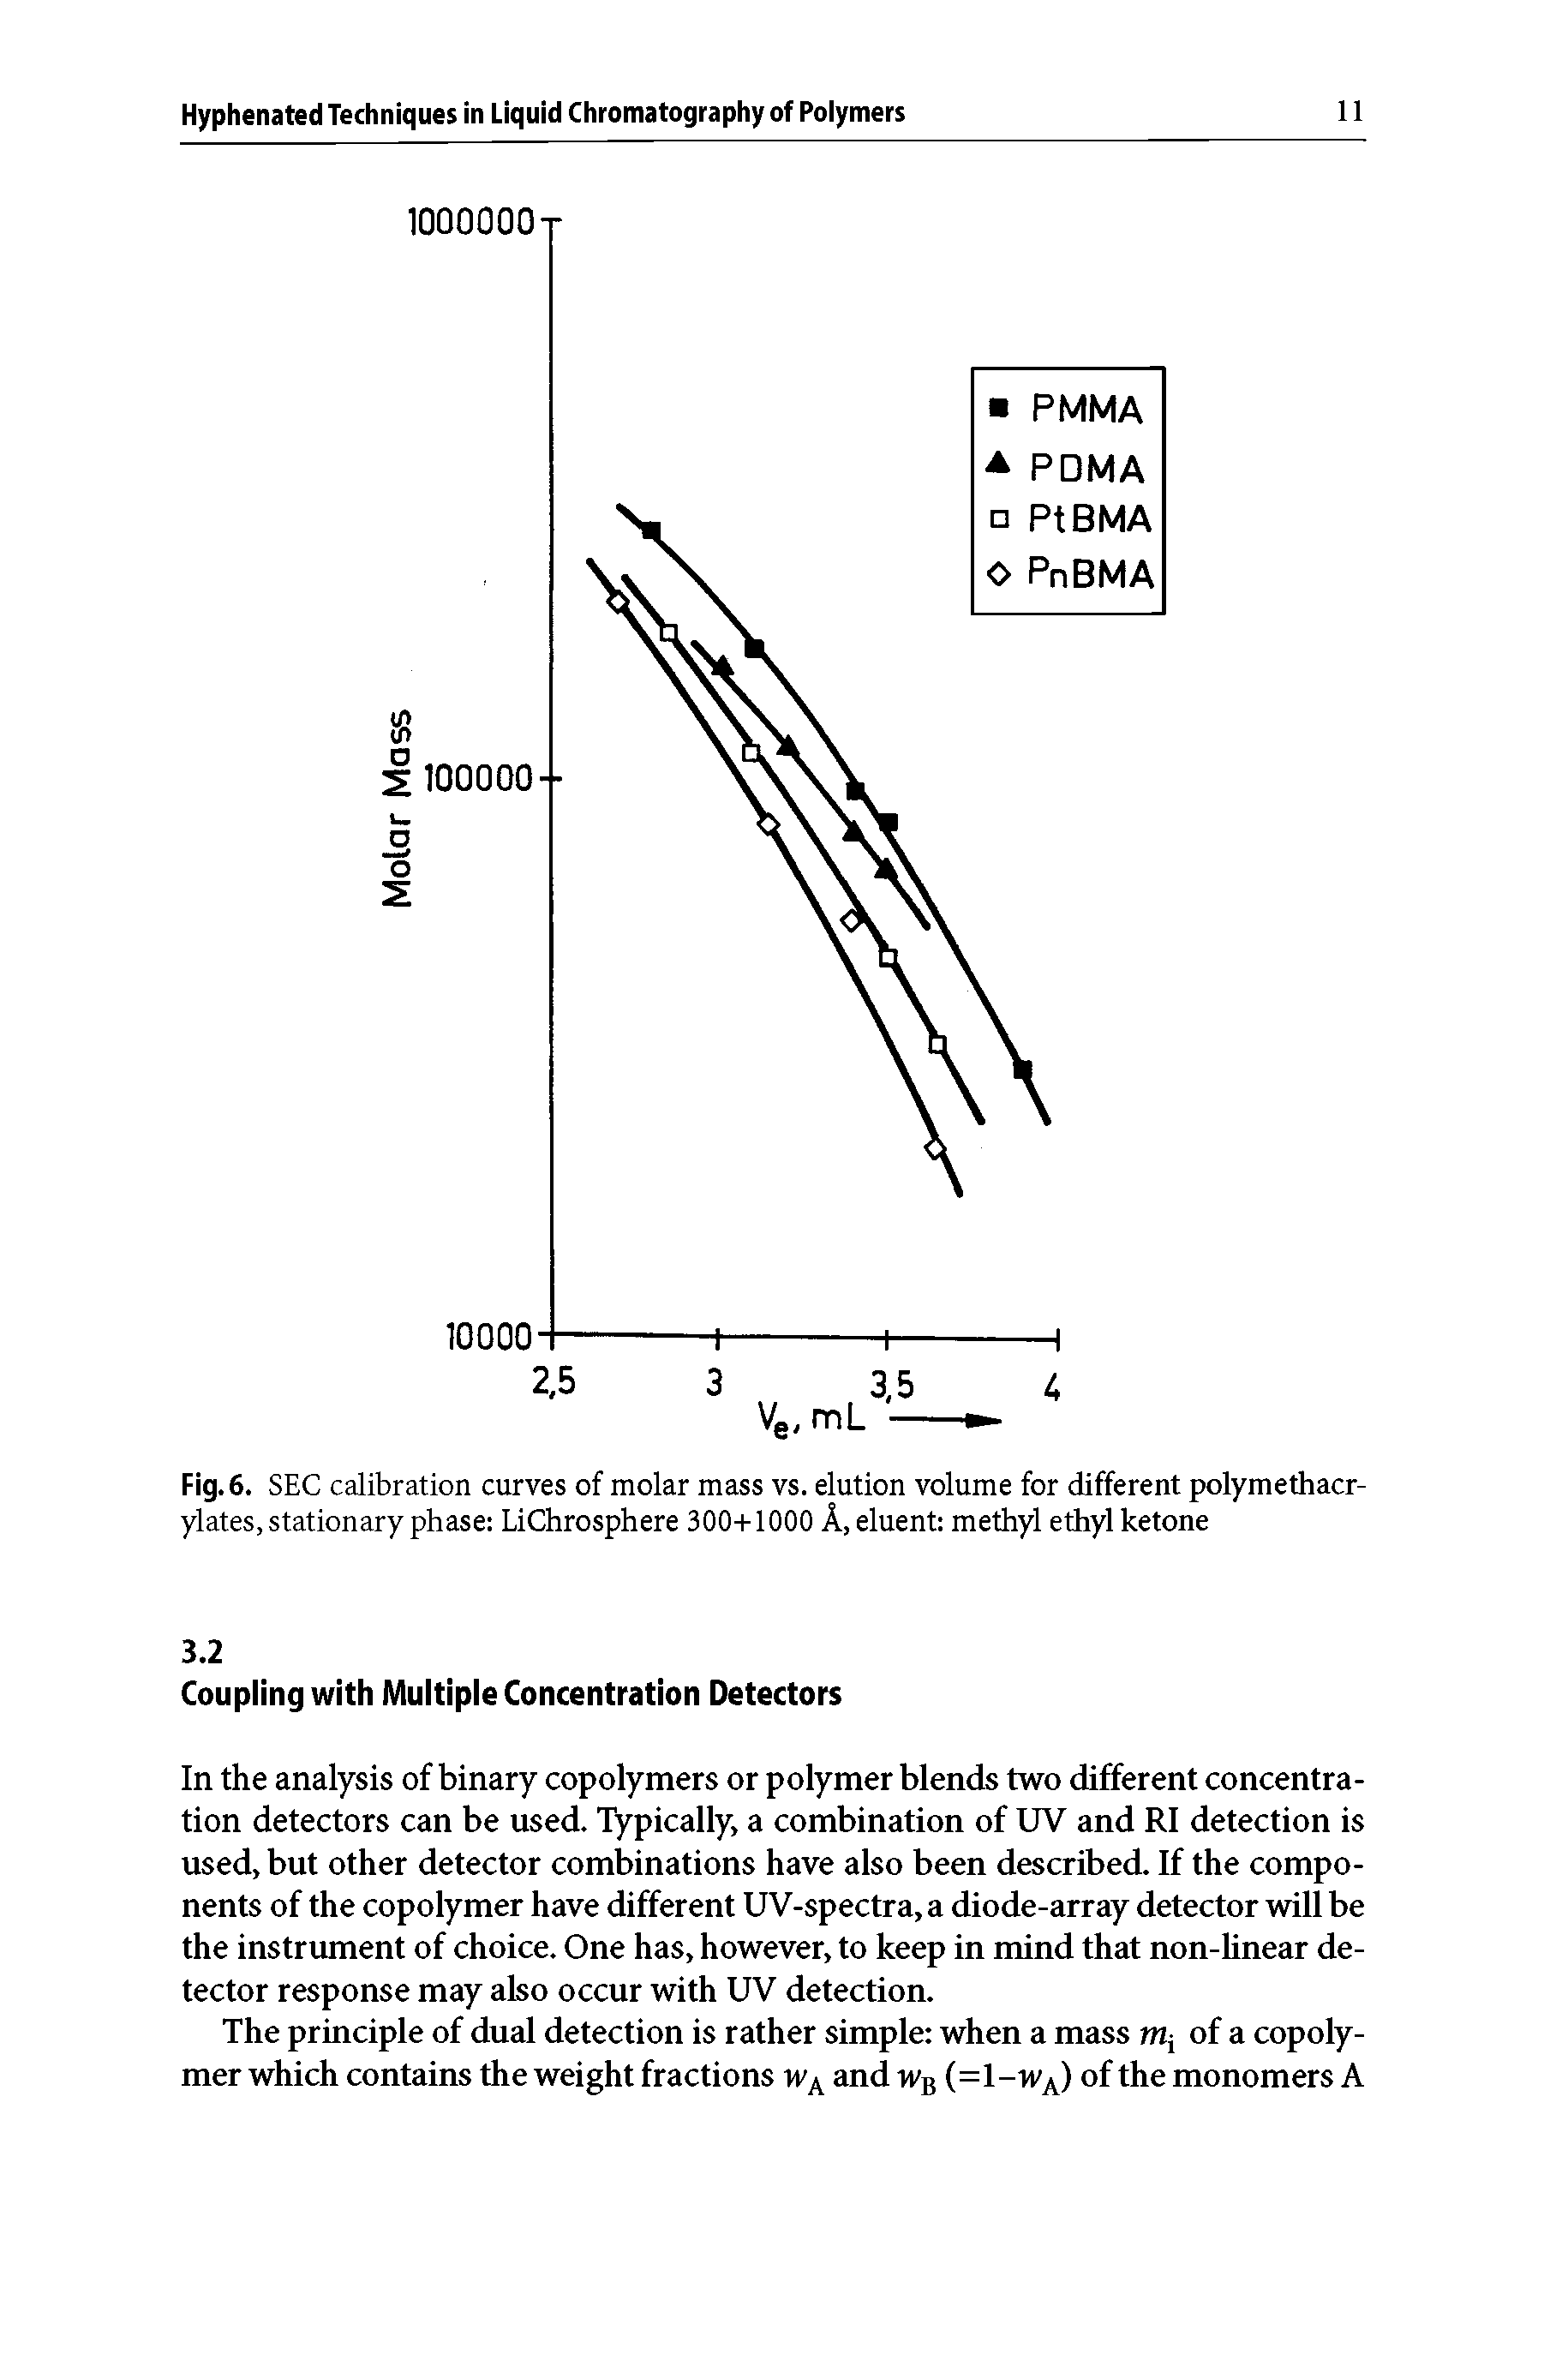 Fig. 6. SEC calibration curves of molar mass vs. elution volume for different polymethacrylates, stationary phase LiChrosphere 300+1000 A, eluent methyl ethyl ketone...